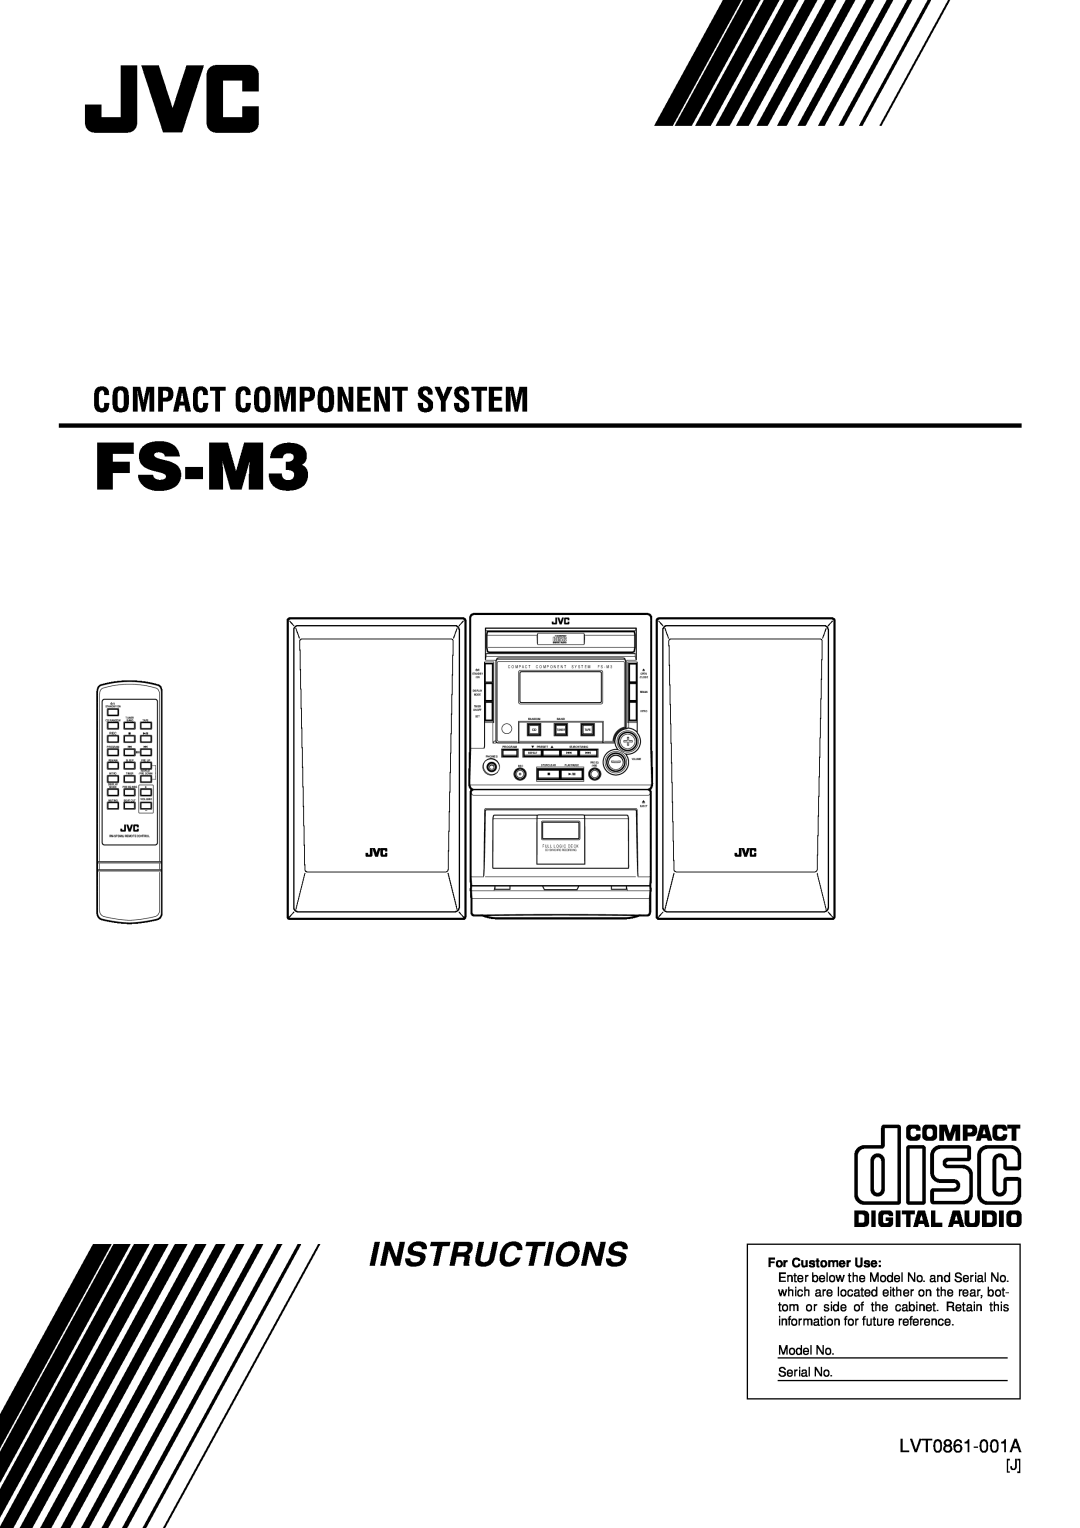 JVC FS-M3 manual Compact Component System, Instructions, LVT0861-001A, For Customer Use, F U L L L O G I C D E C K 